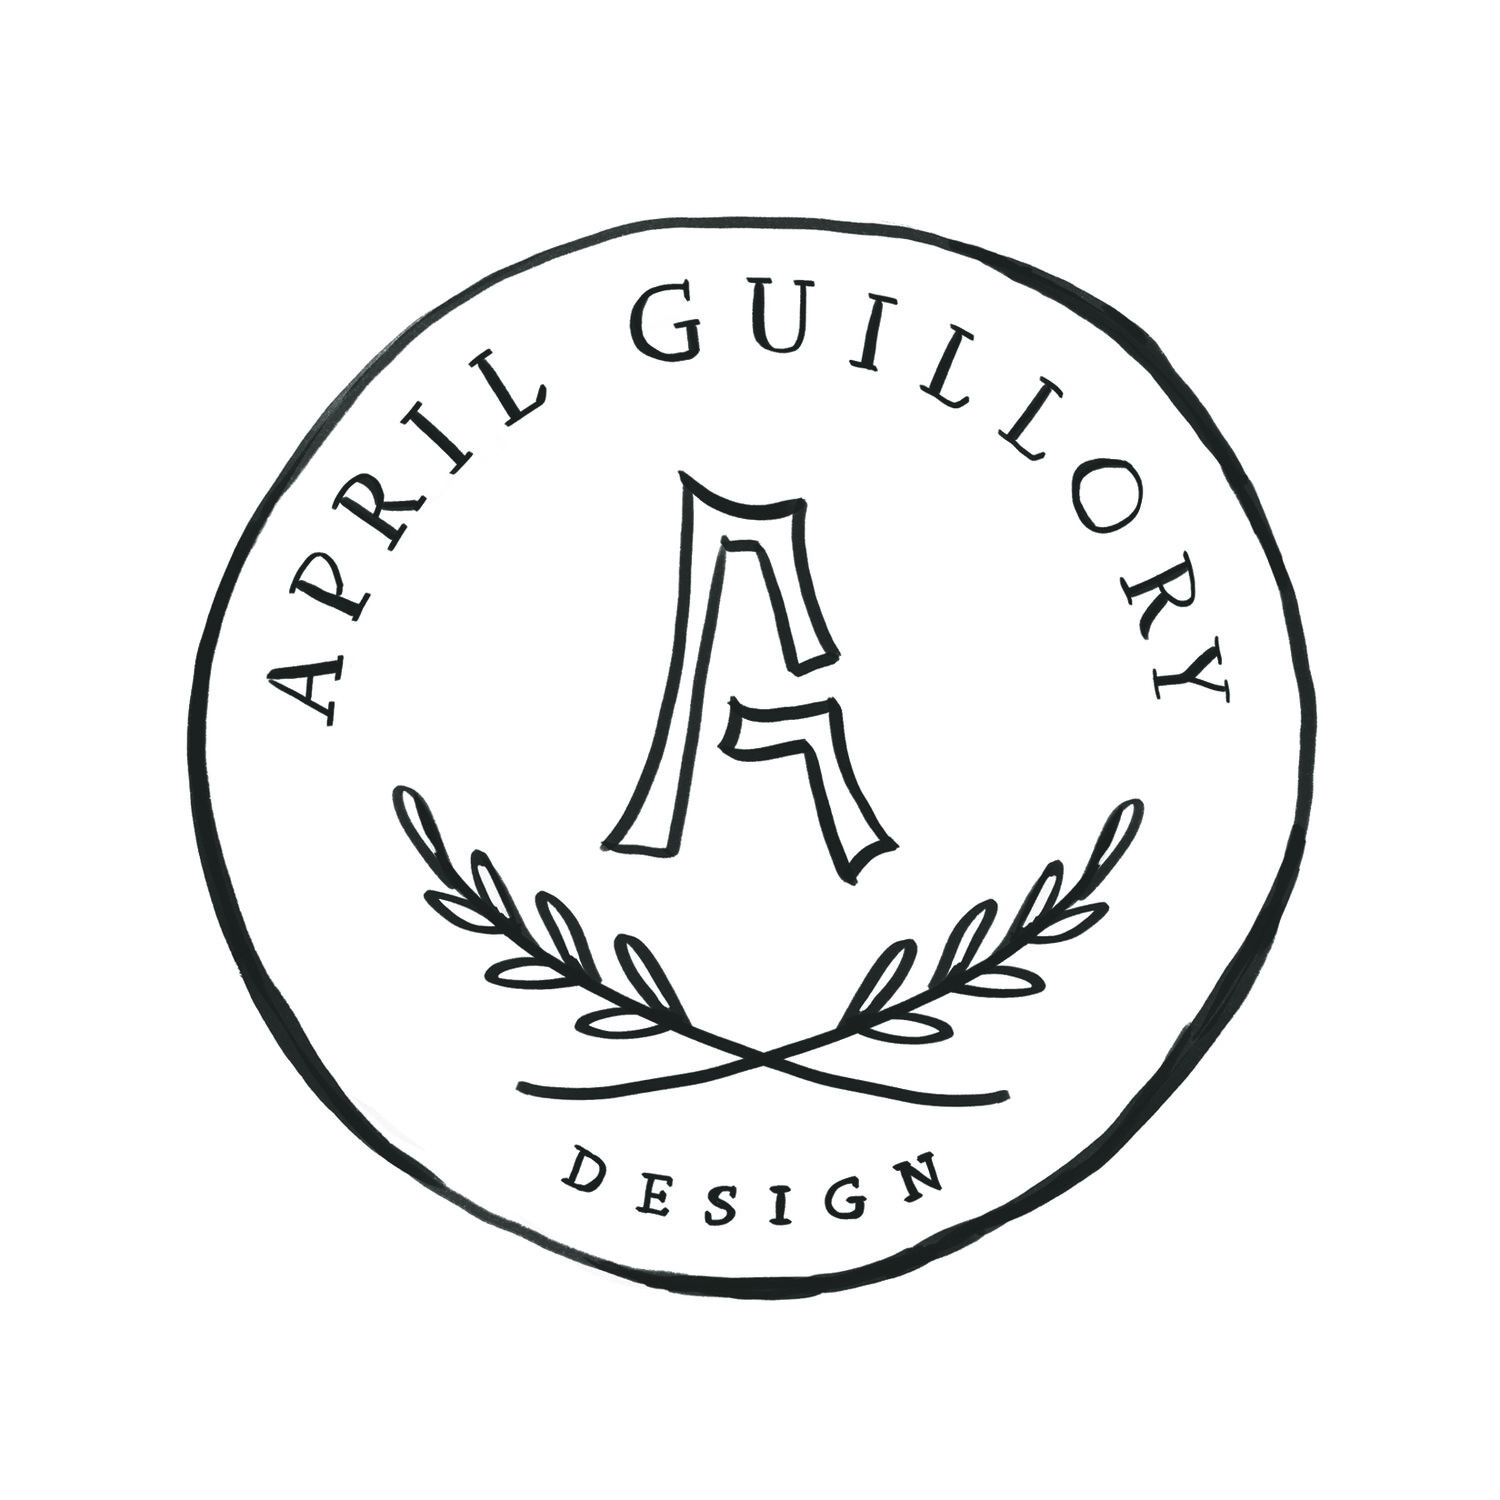 April Guillory Design